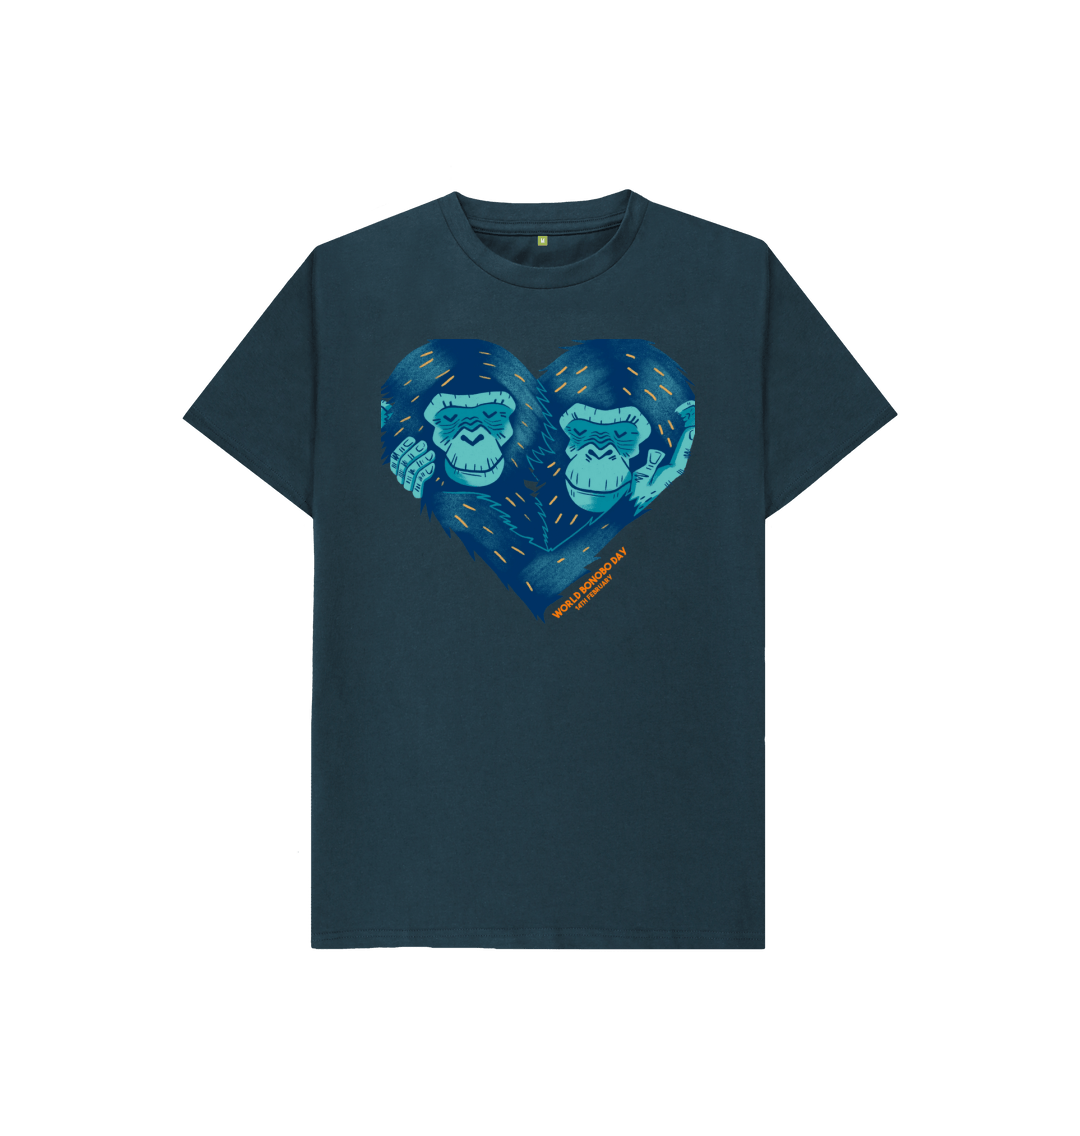 Day Kids Bonobo World T-shirt